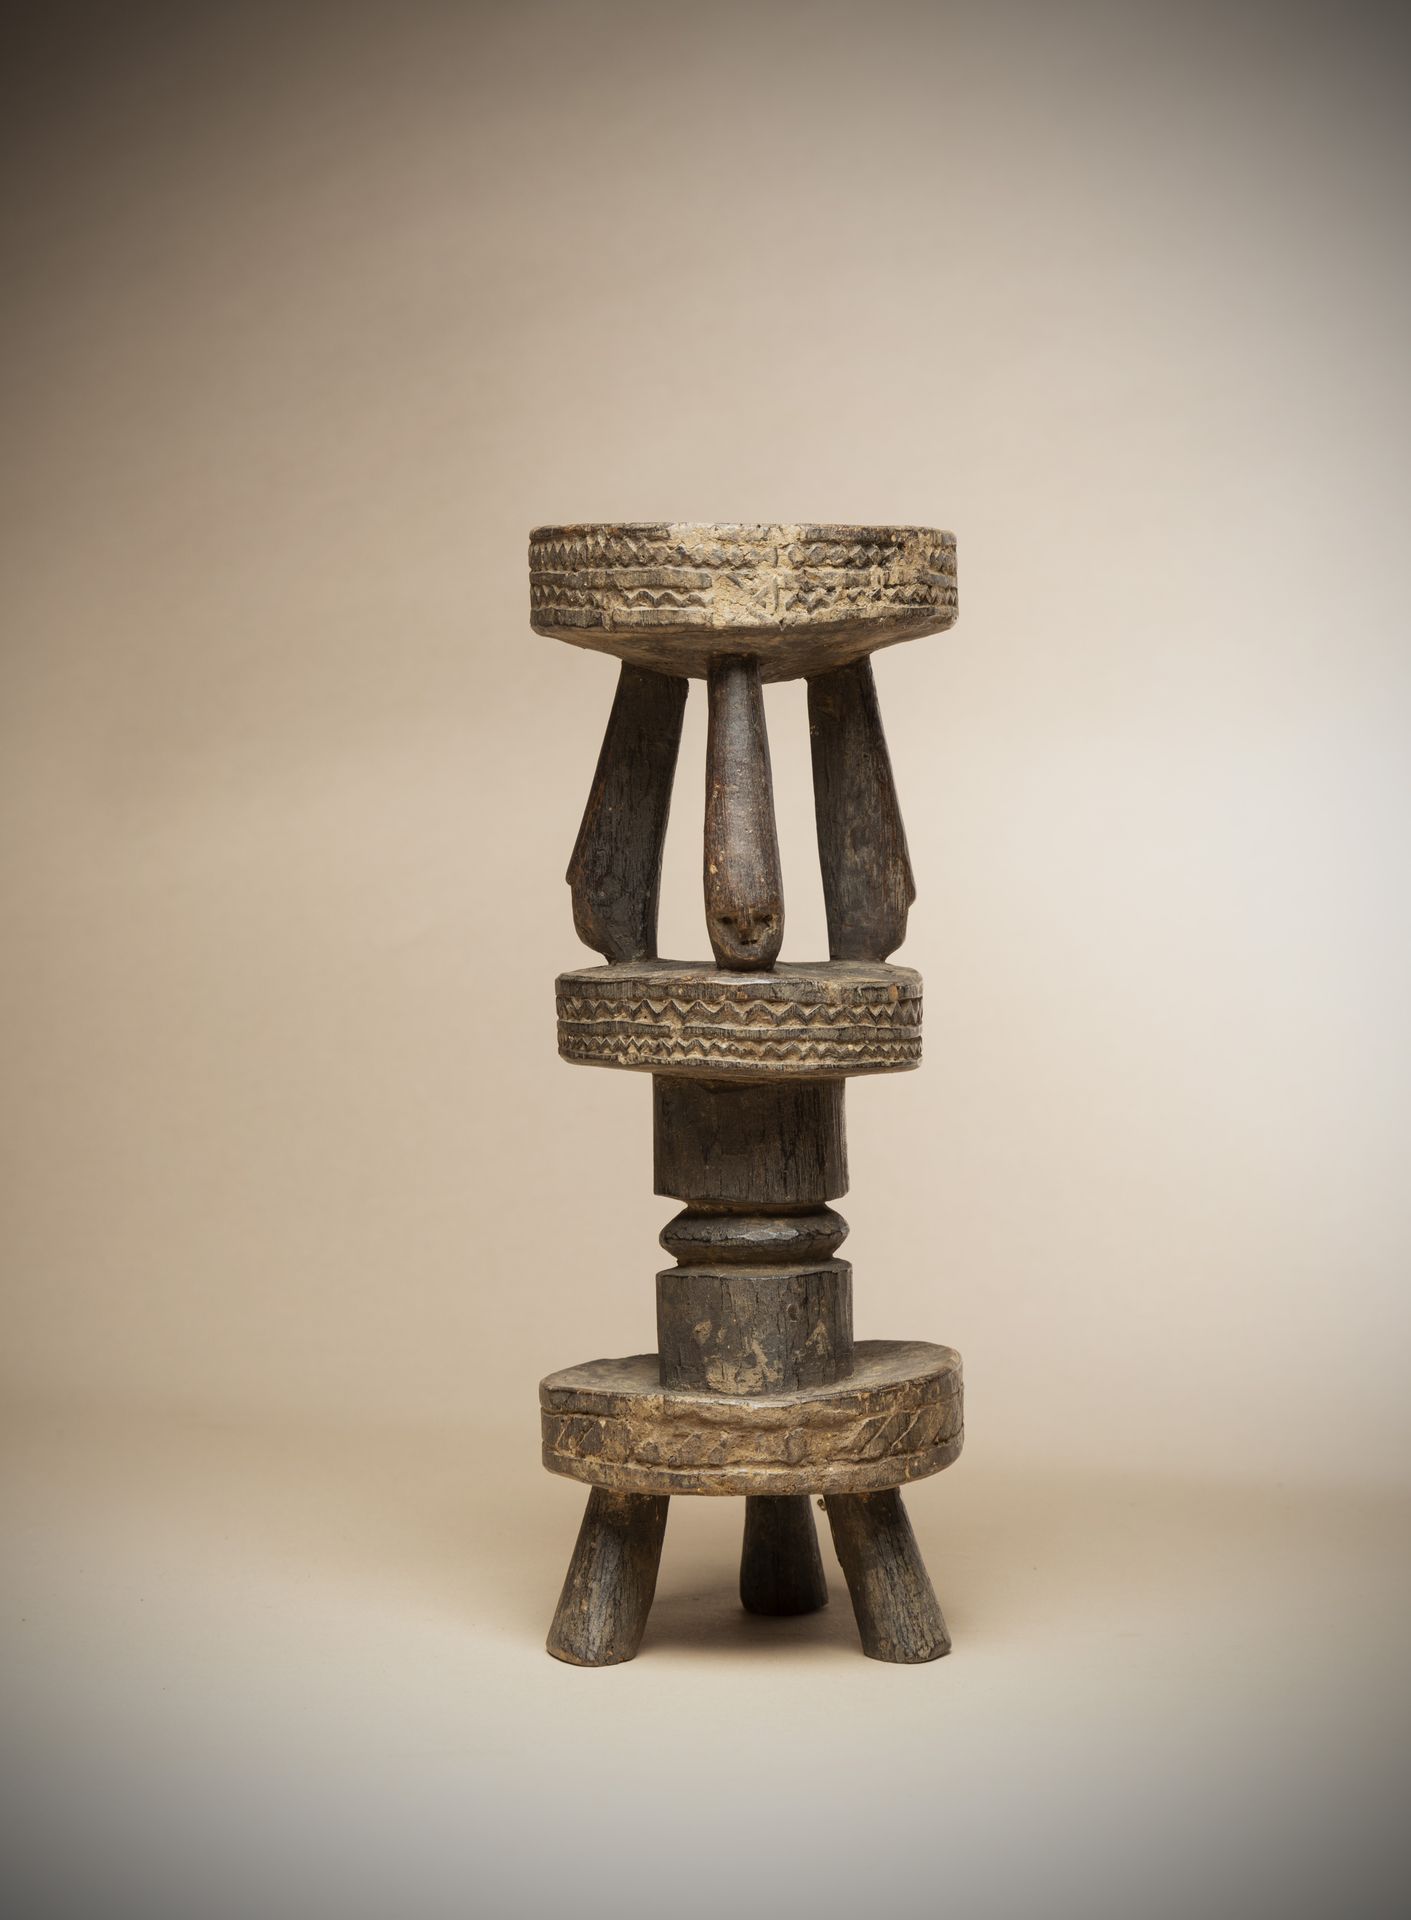 Null KWERE (坦桑尼亚)

由三个叠加的托盘组成的Monoxyle祭坛，其中最后一个托盘由三个头颅支撑。美丽而古老的棕色铜锈

高度：25厘米